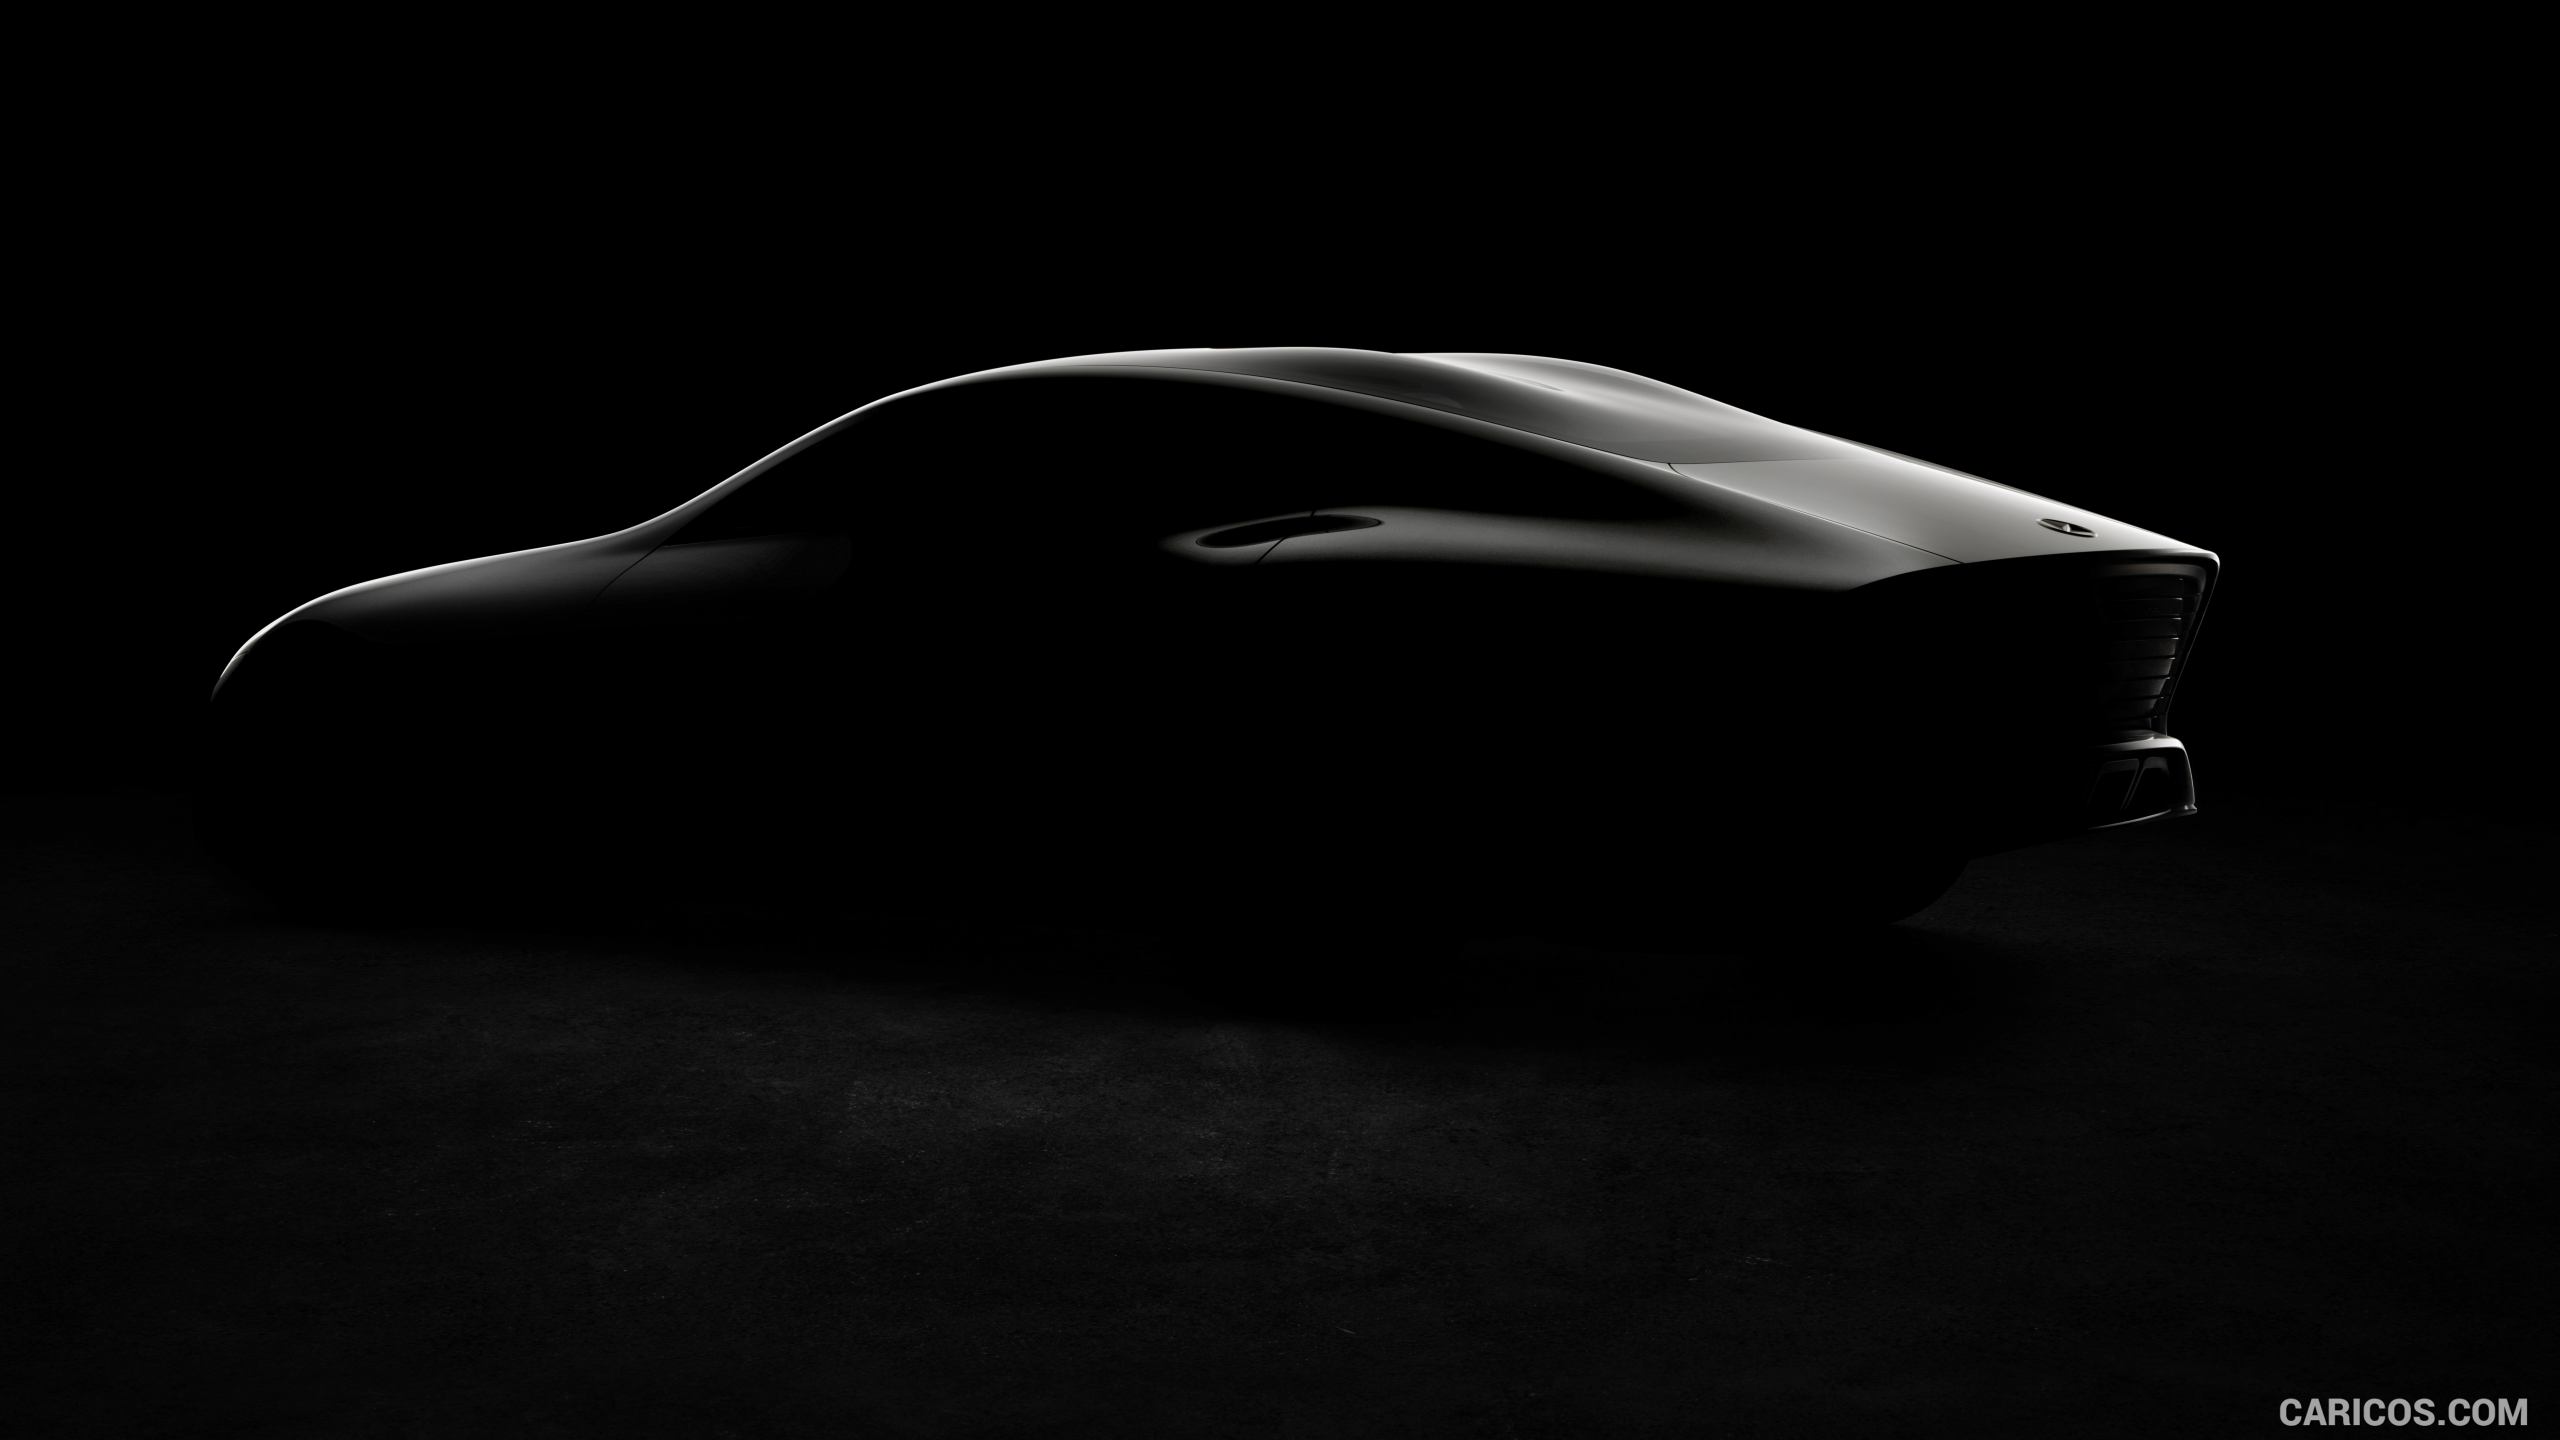 2015 Mercedes-Benz Concept IAA (Intelligent Aerodynamic Automobile) - Side, #28 of 49